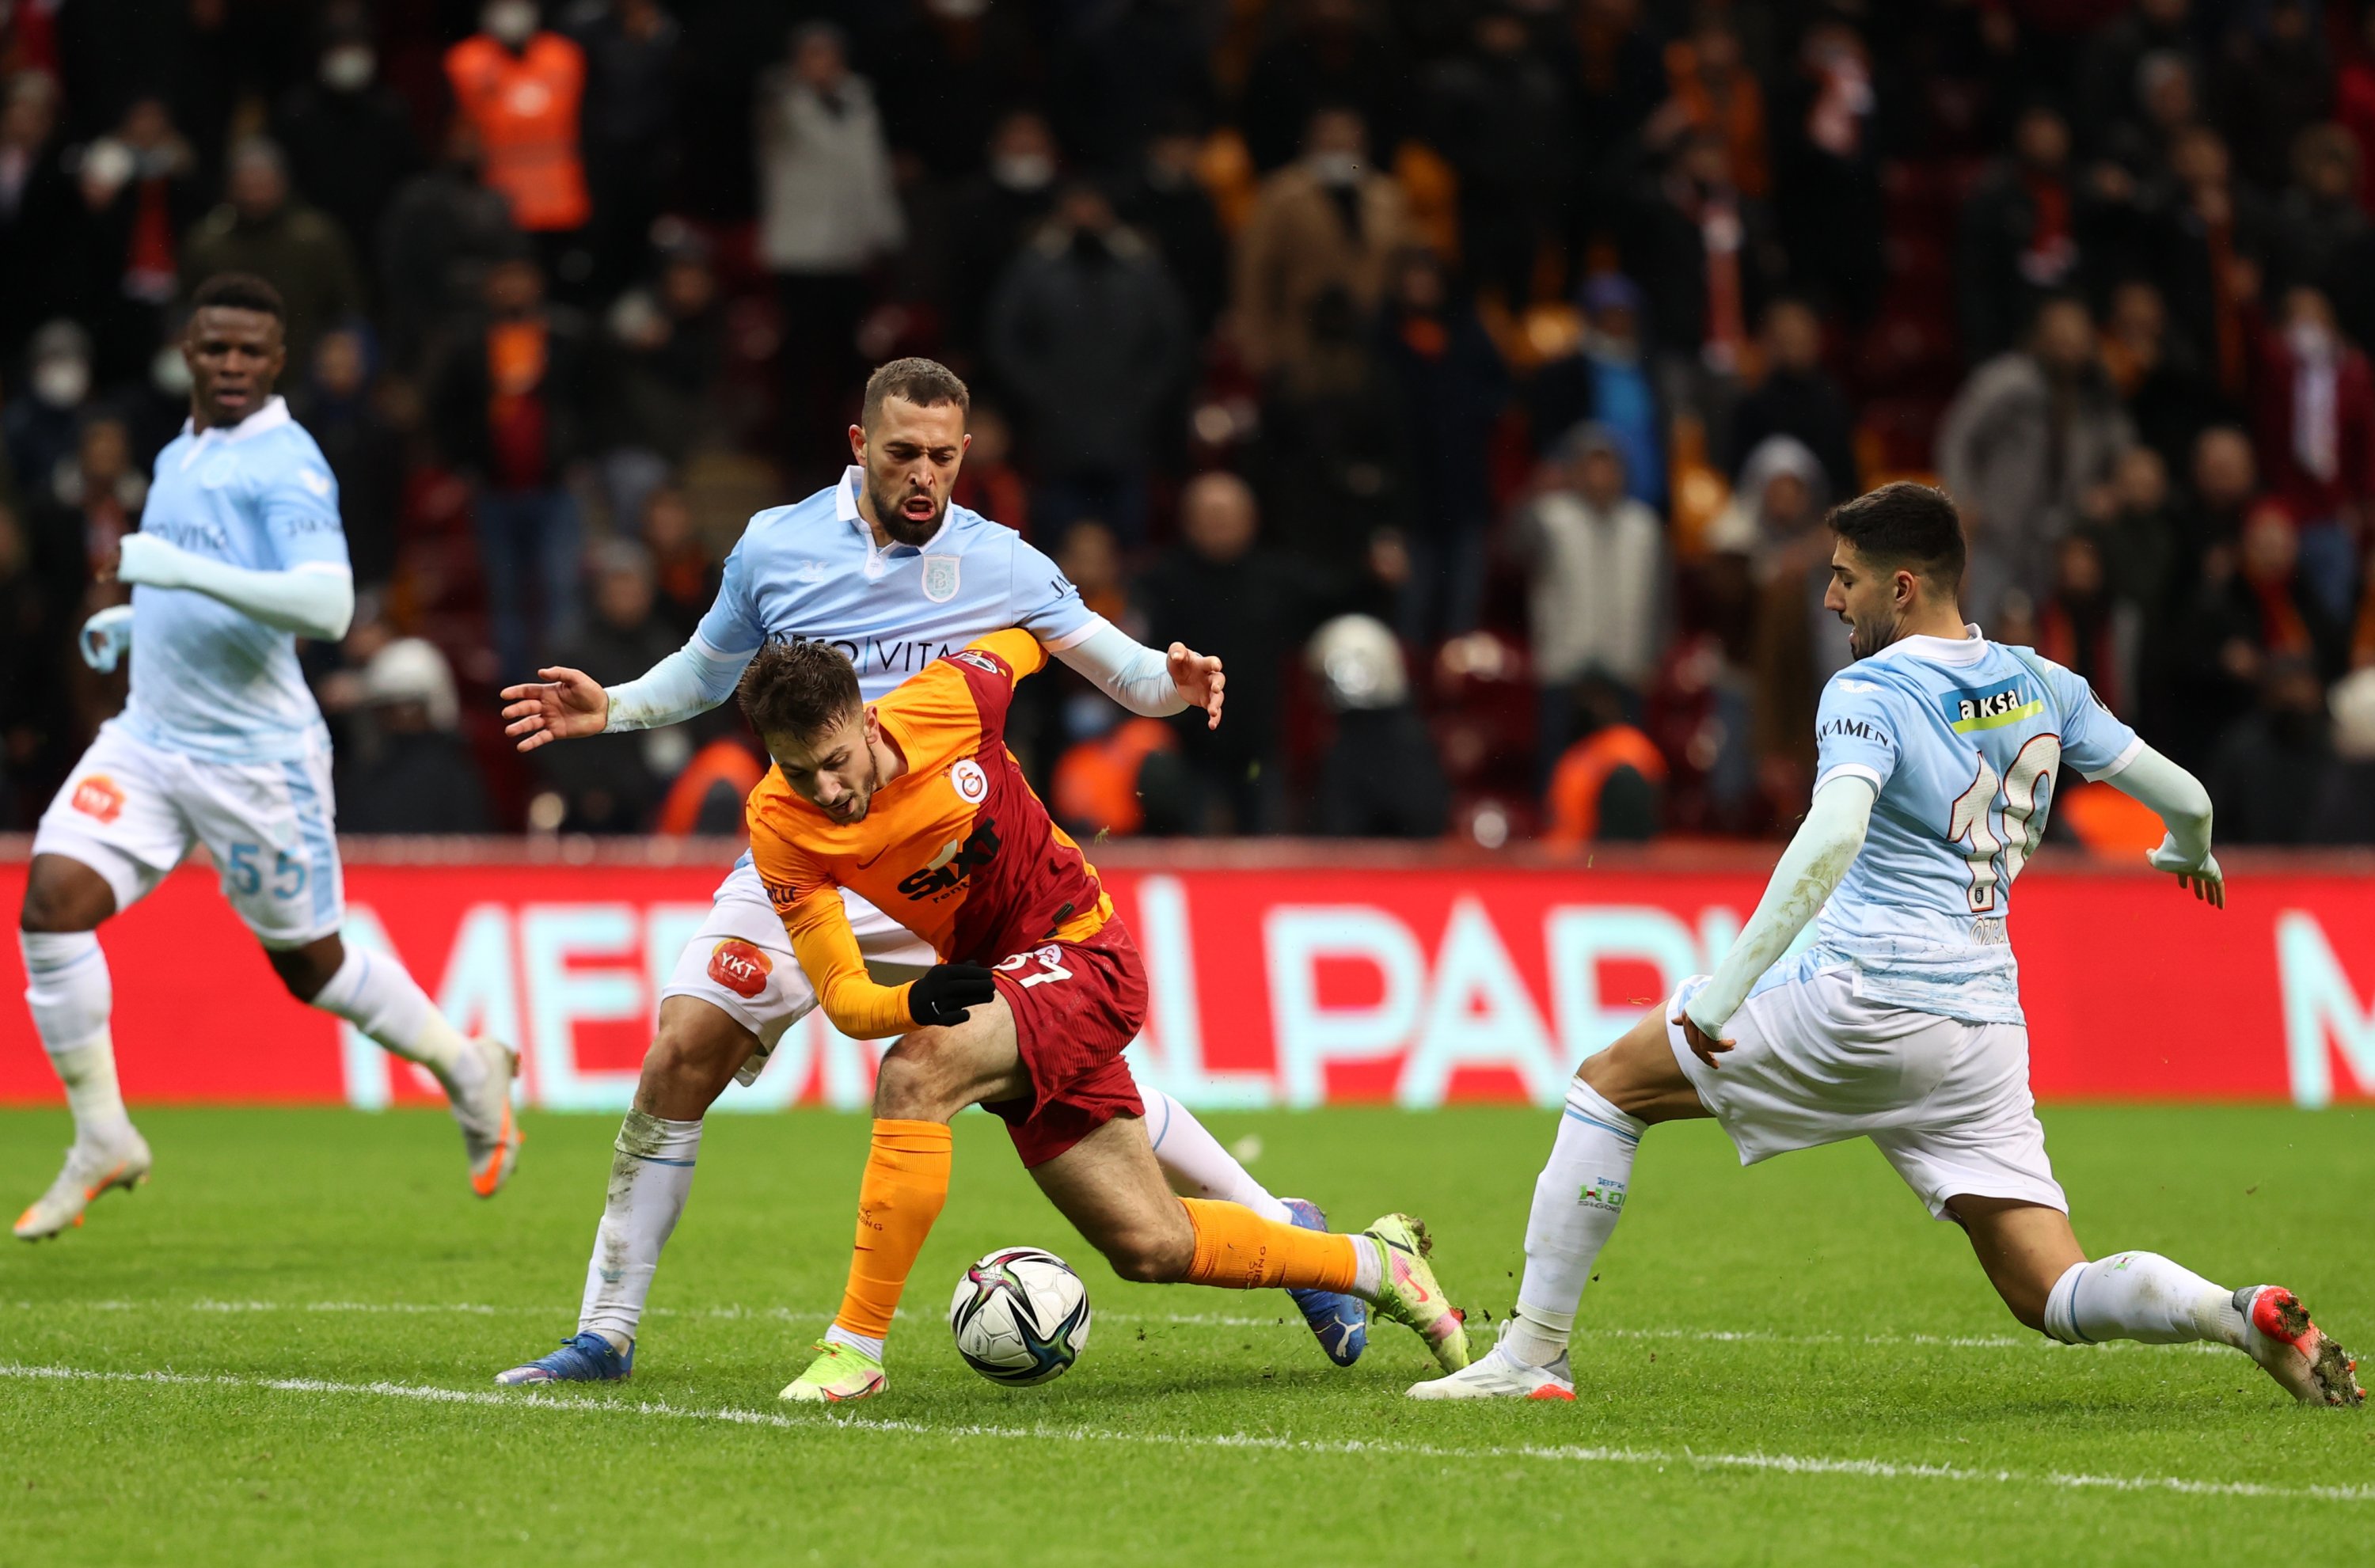 Galatasaray's Halil Dervişoğlu (C) tries to go past two Başakşehir players during a Süper Lig match, Istanbul, Turkey, Dec. 18, 2021. (AA Photo)